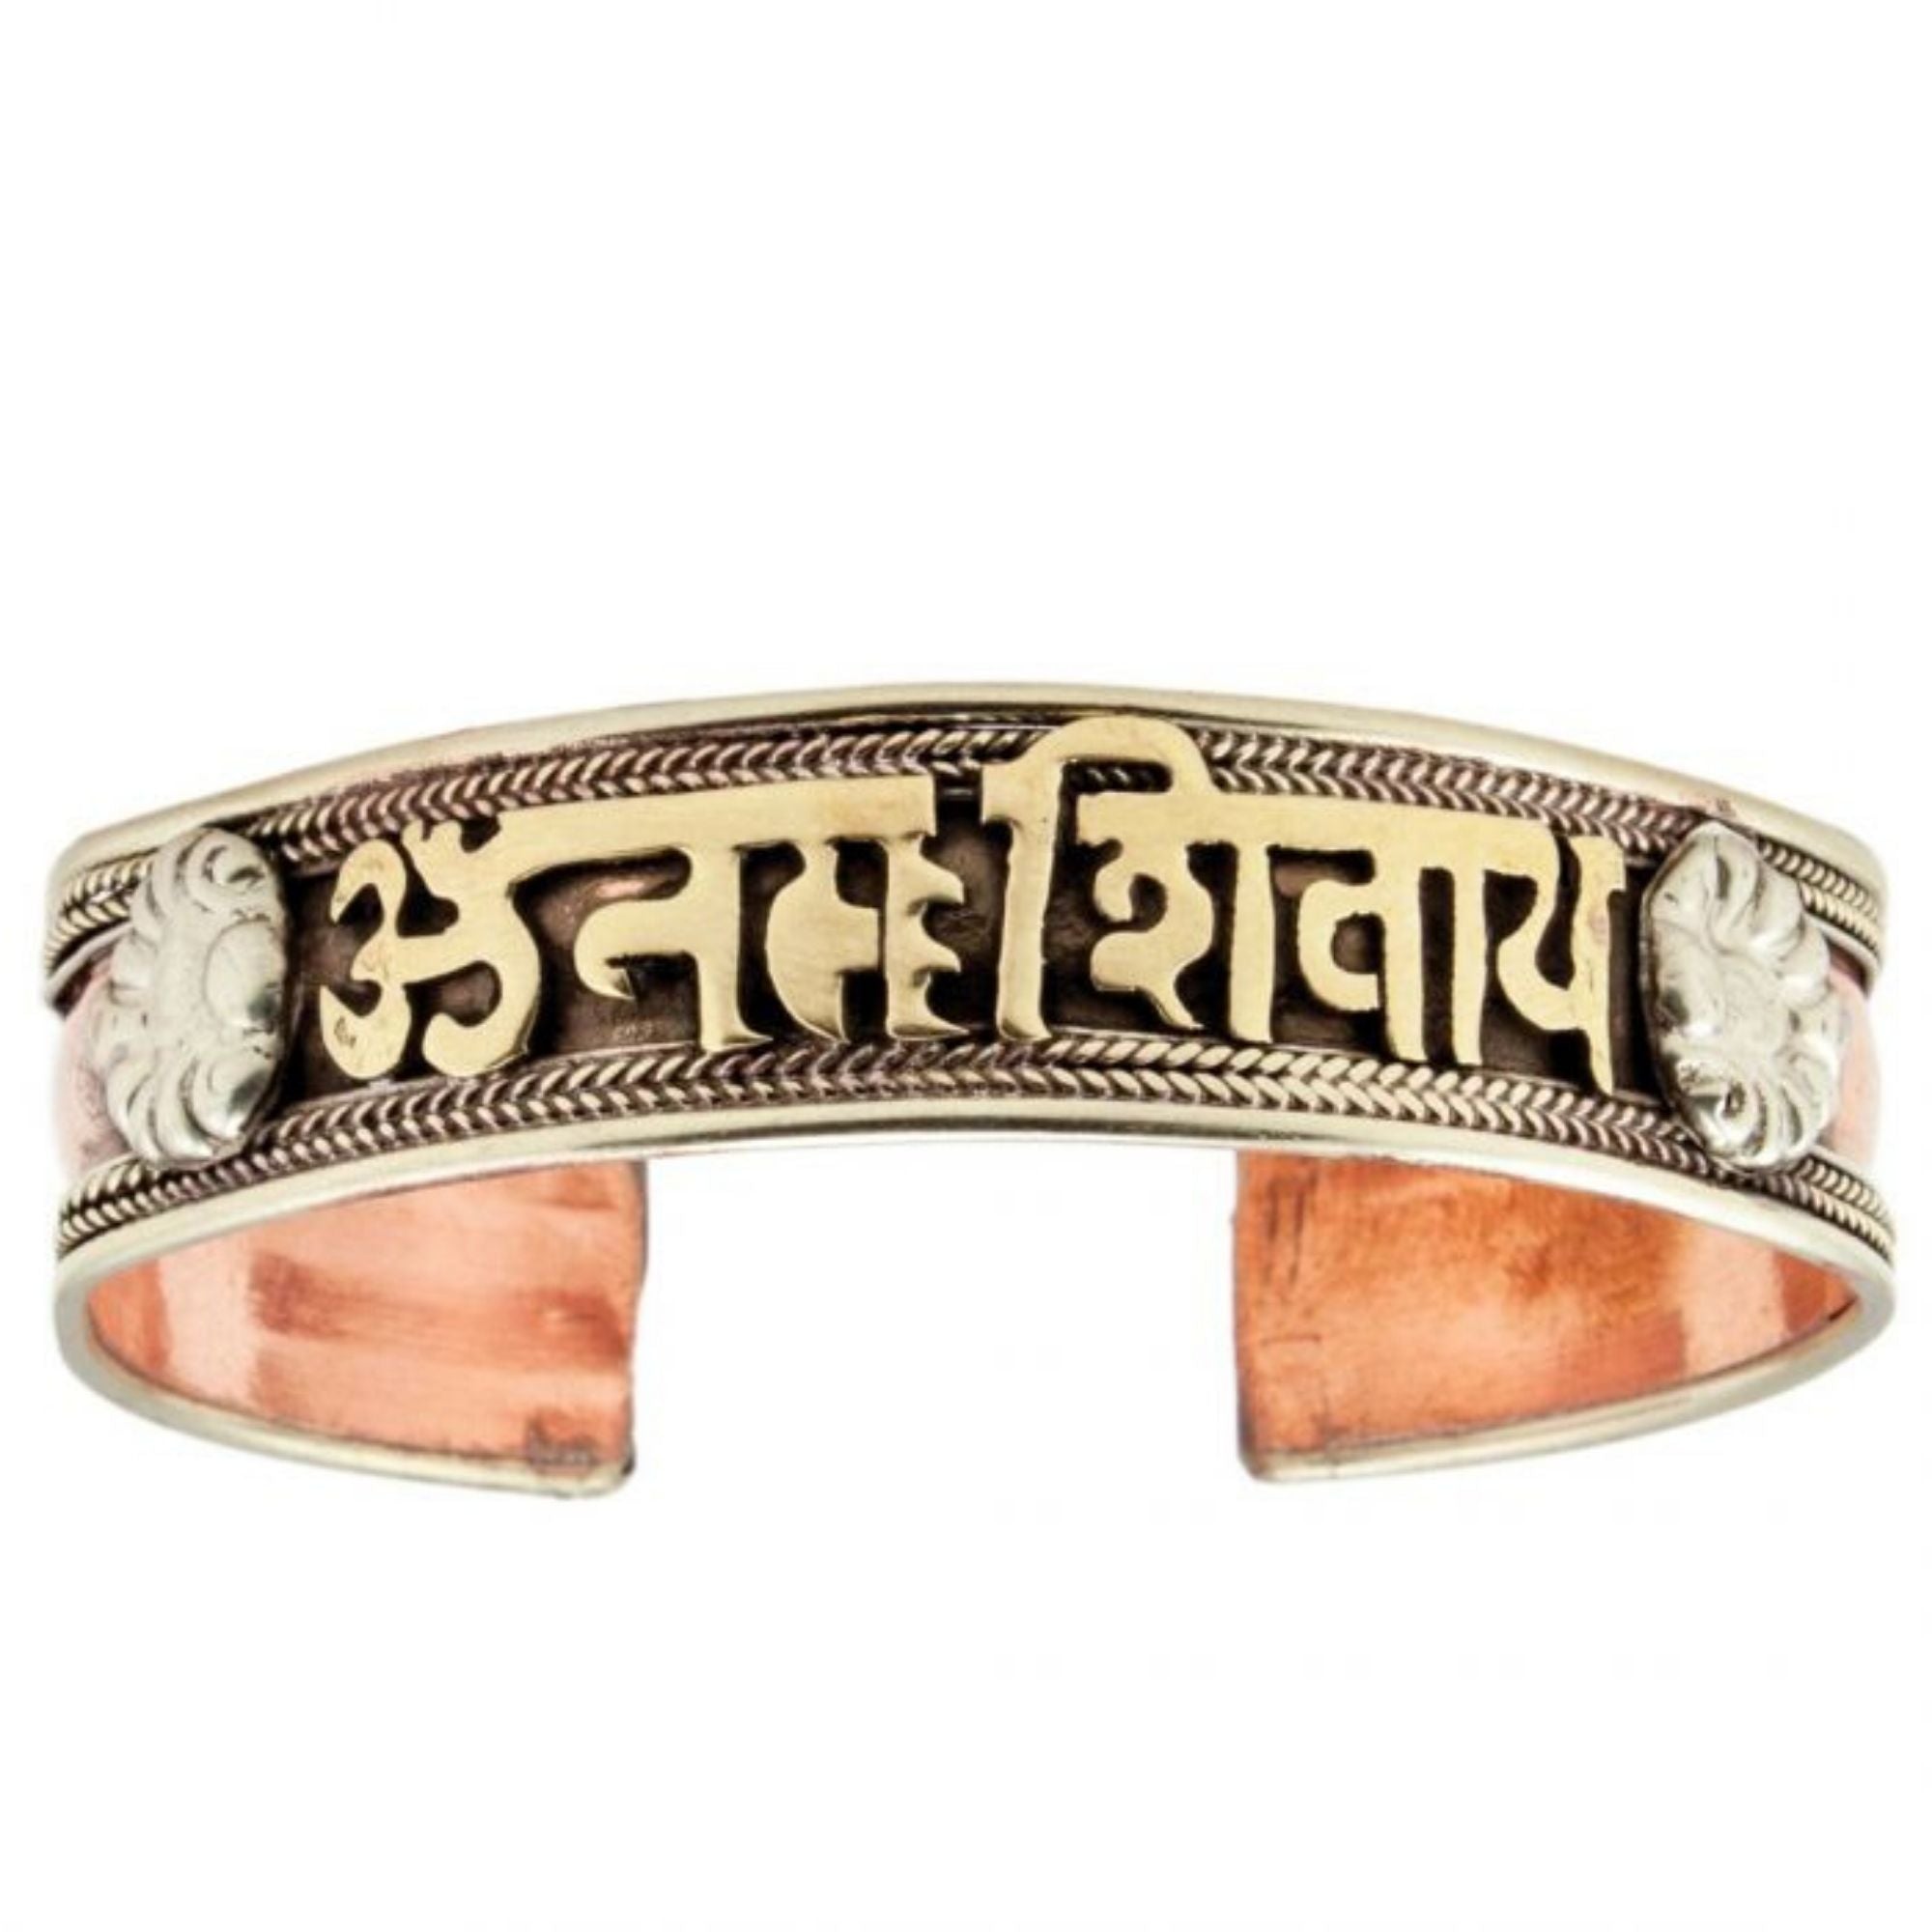 Bracelet FOR Man Indian Traditional Kada BRASS Bangle for | Etsy | Bracelets  for men, Aniversary gifts, Trendy jewelry